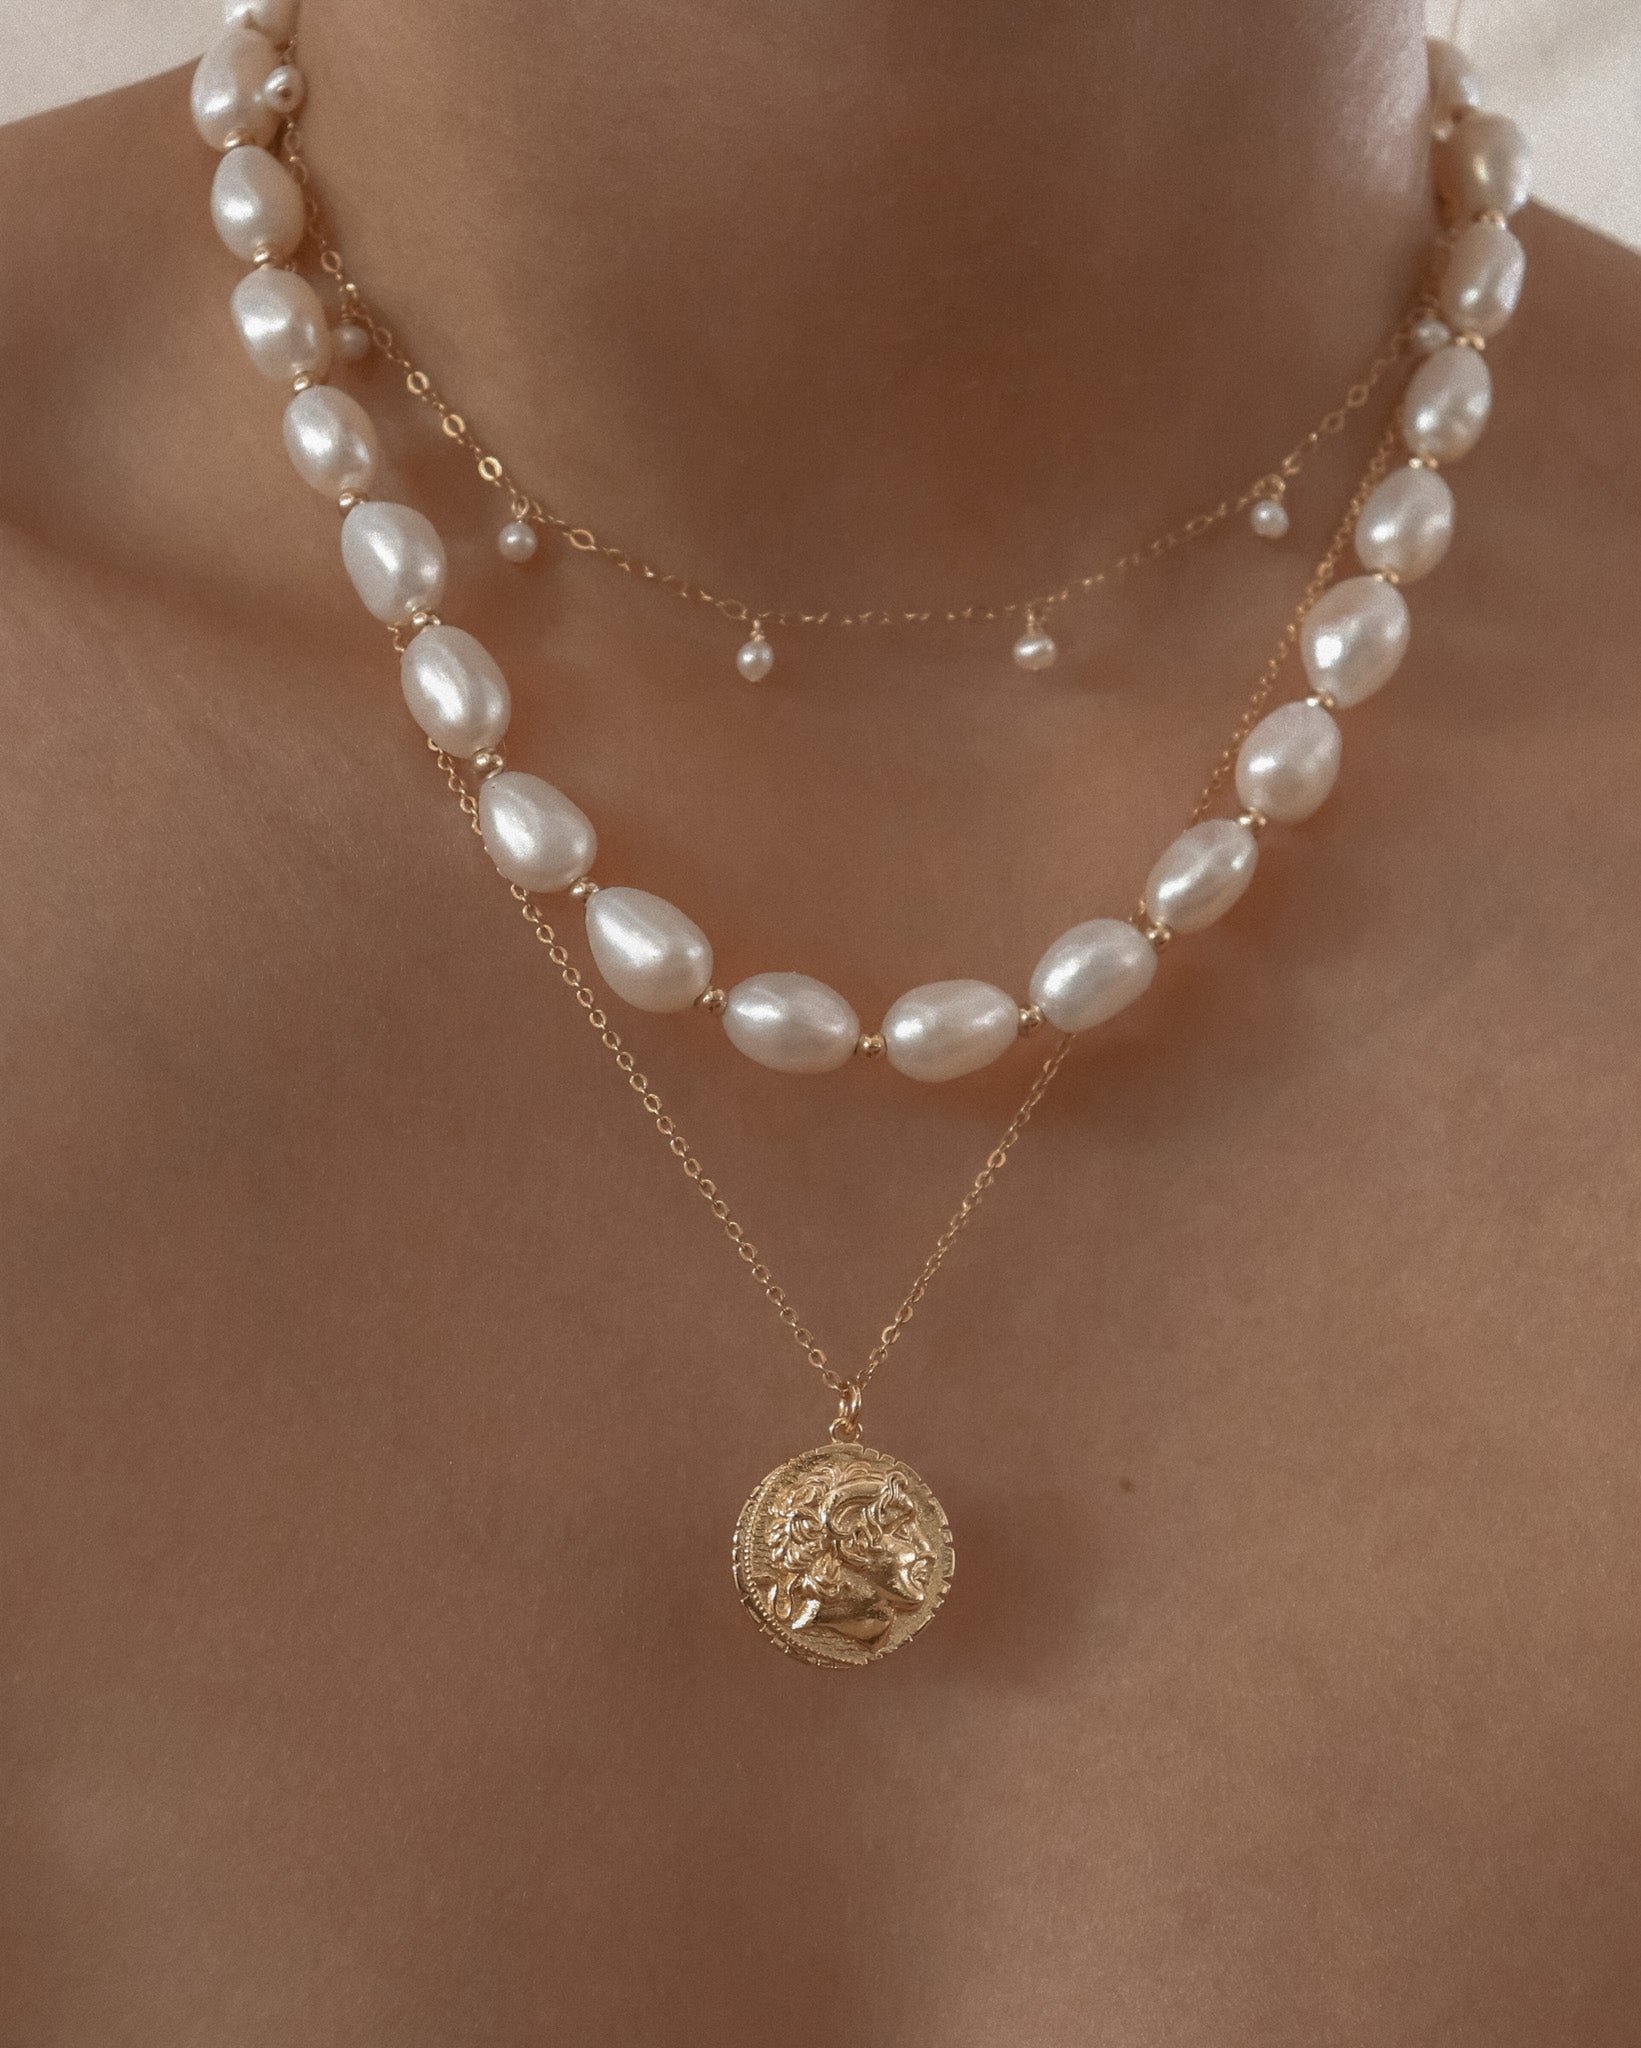 Zoë Chicco 14k Gold Small Pearl Pendant Necklace – ZOË CHICCO